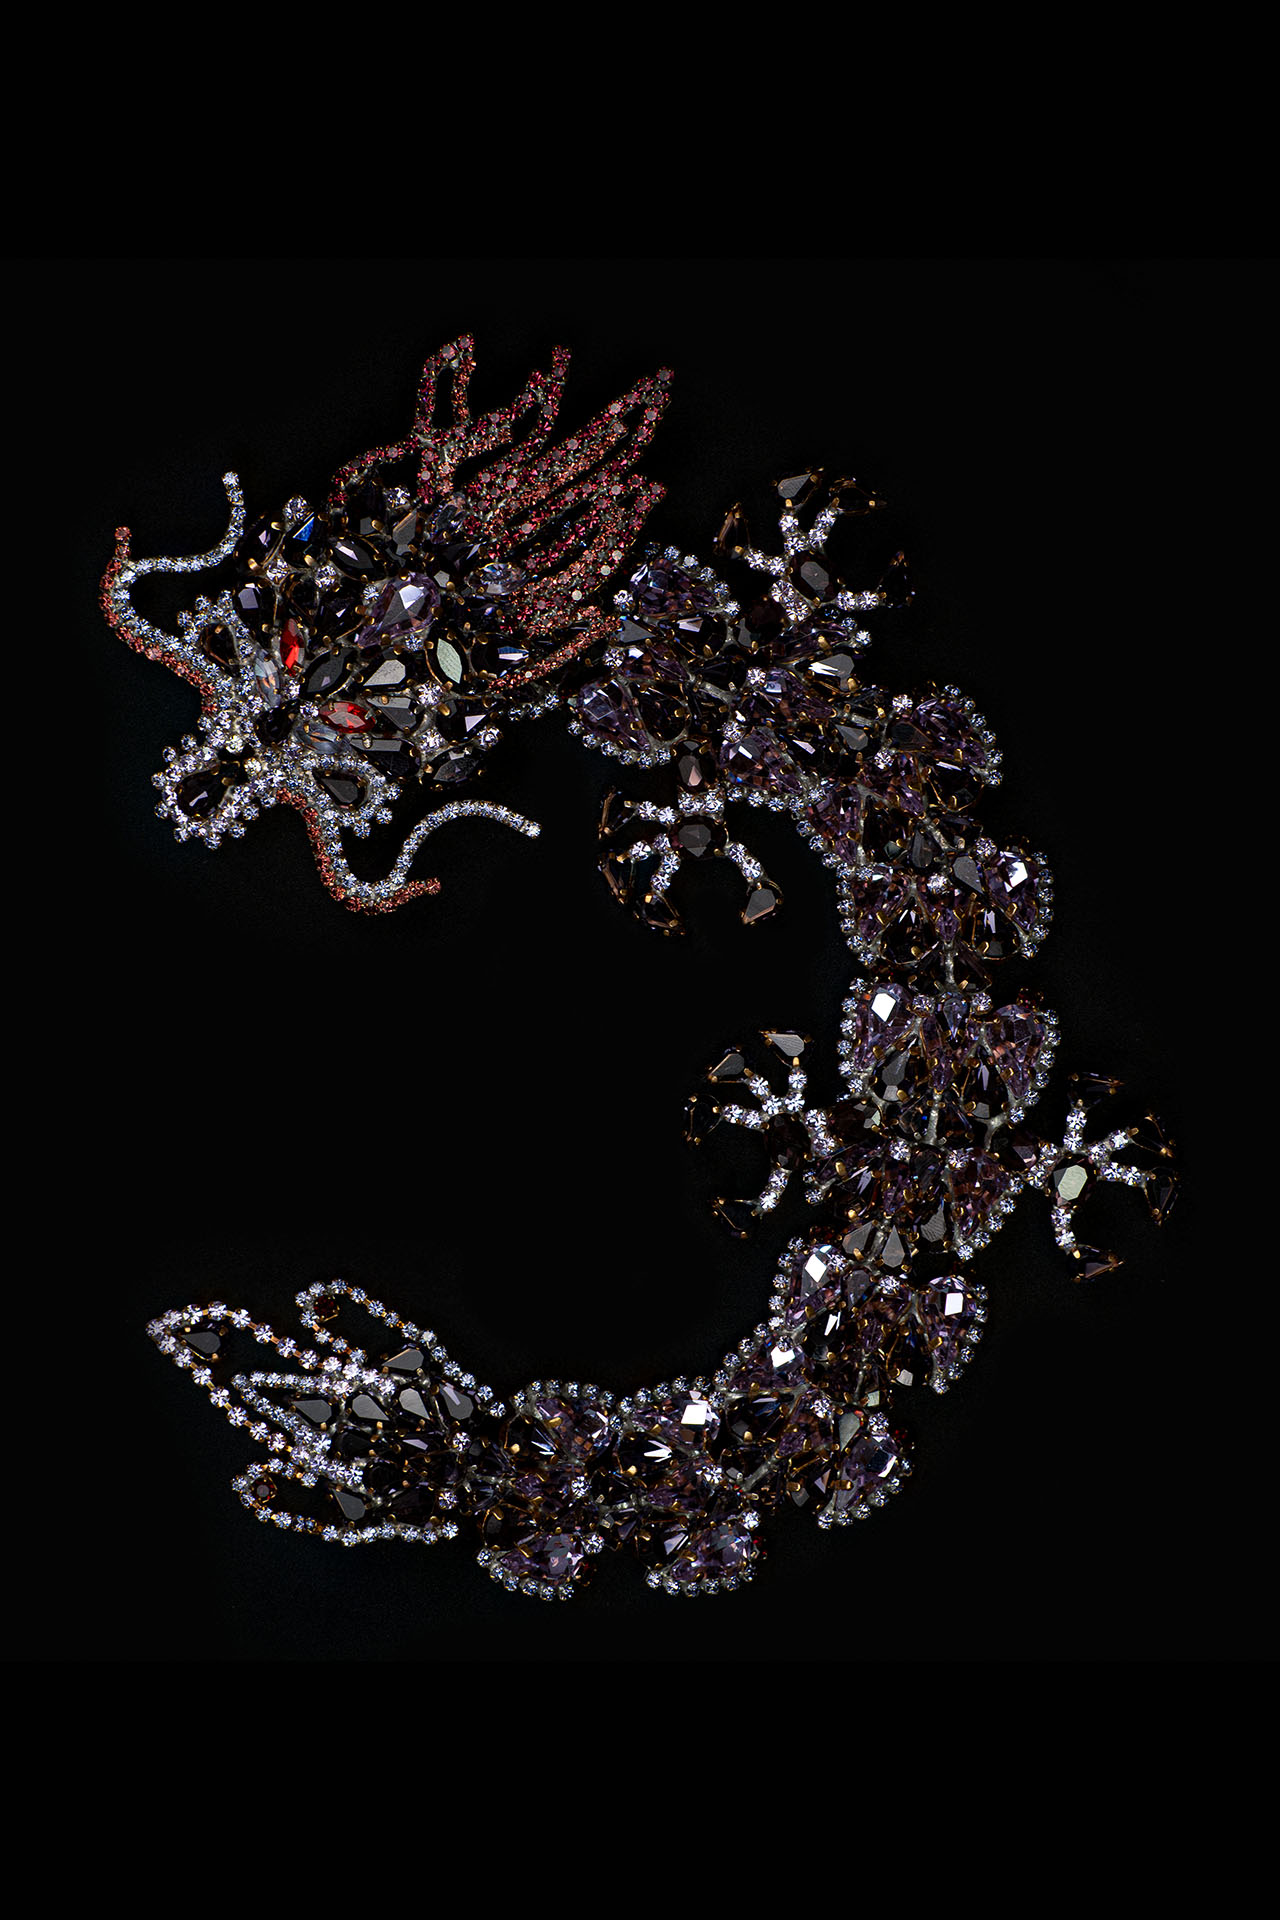 Handmade rhinestone brooch with a purple Chinese dragon